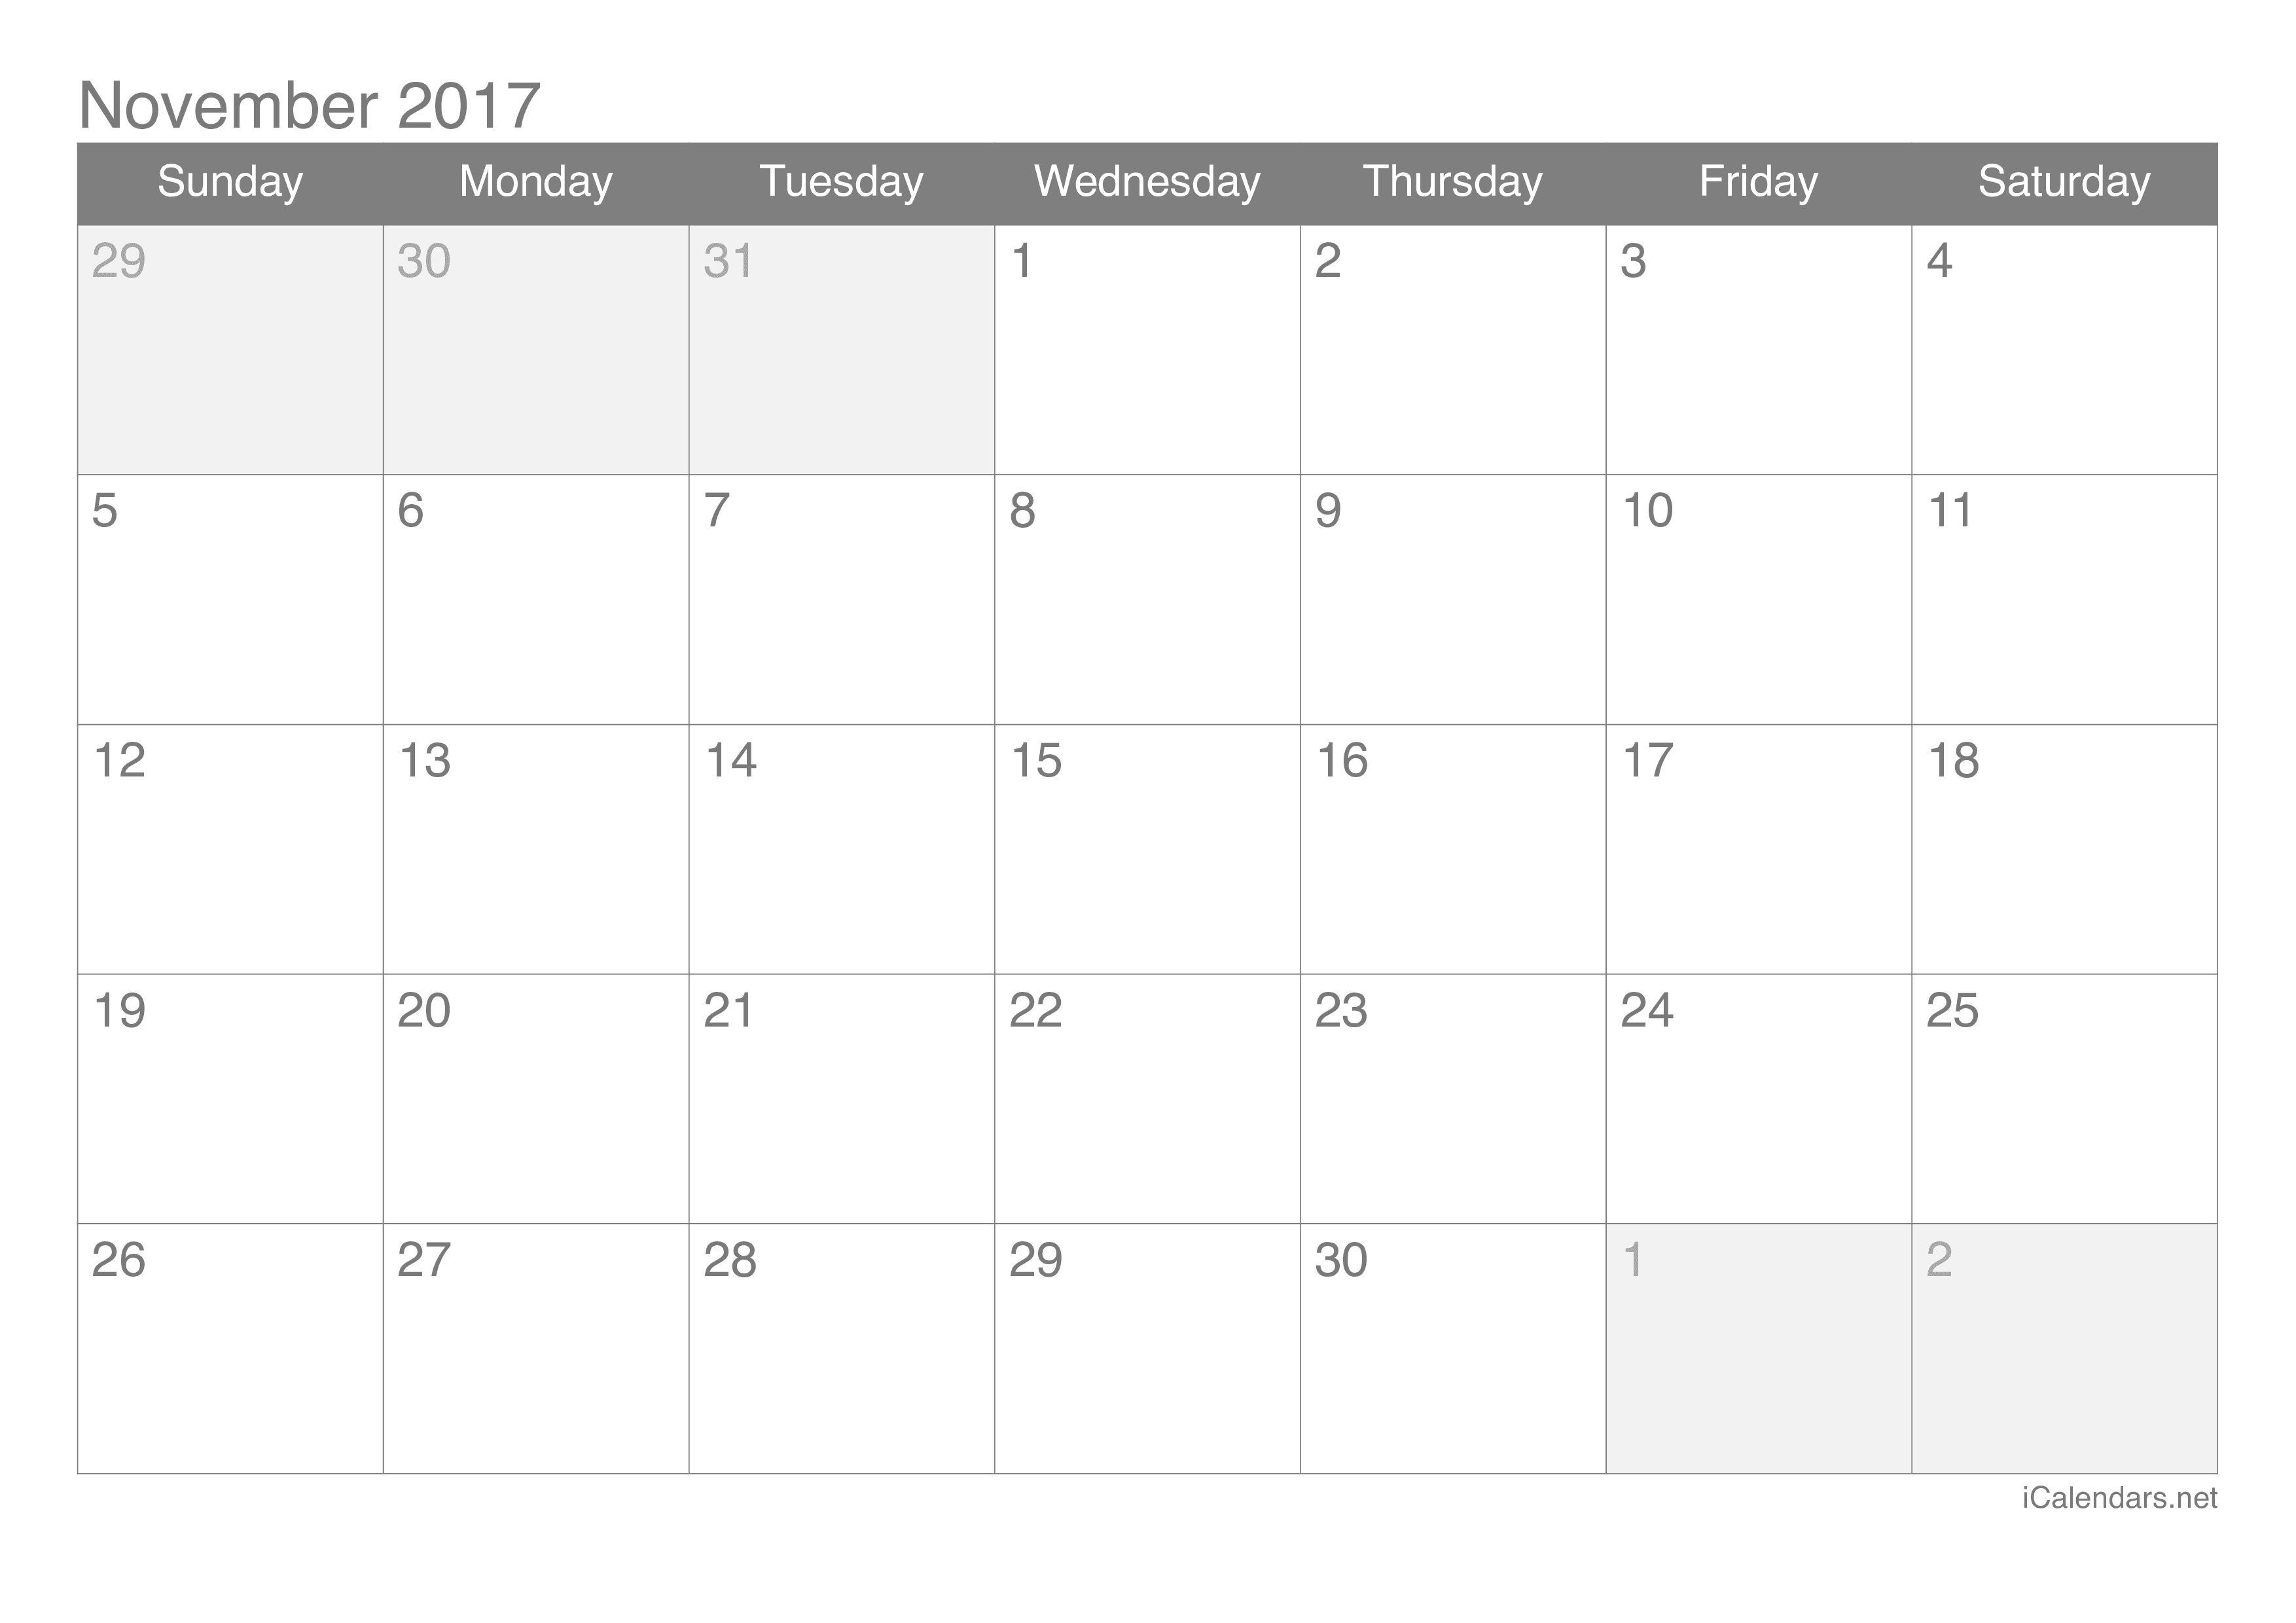 November 2017 Printable Calendar icalendars net